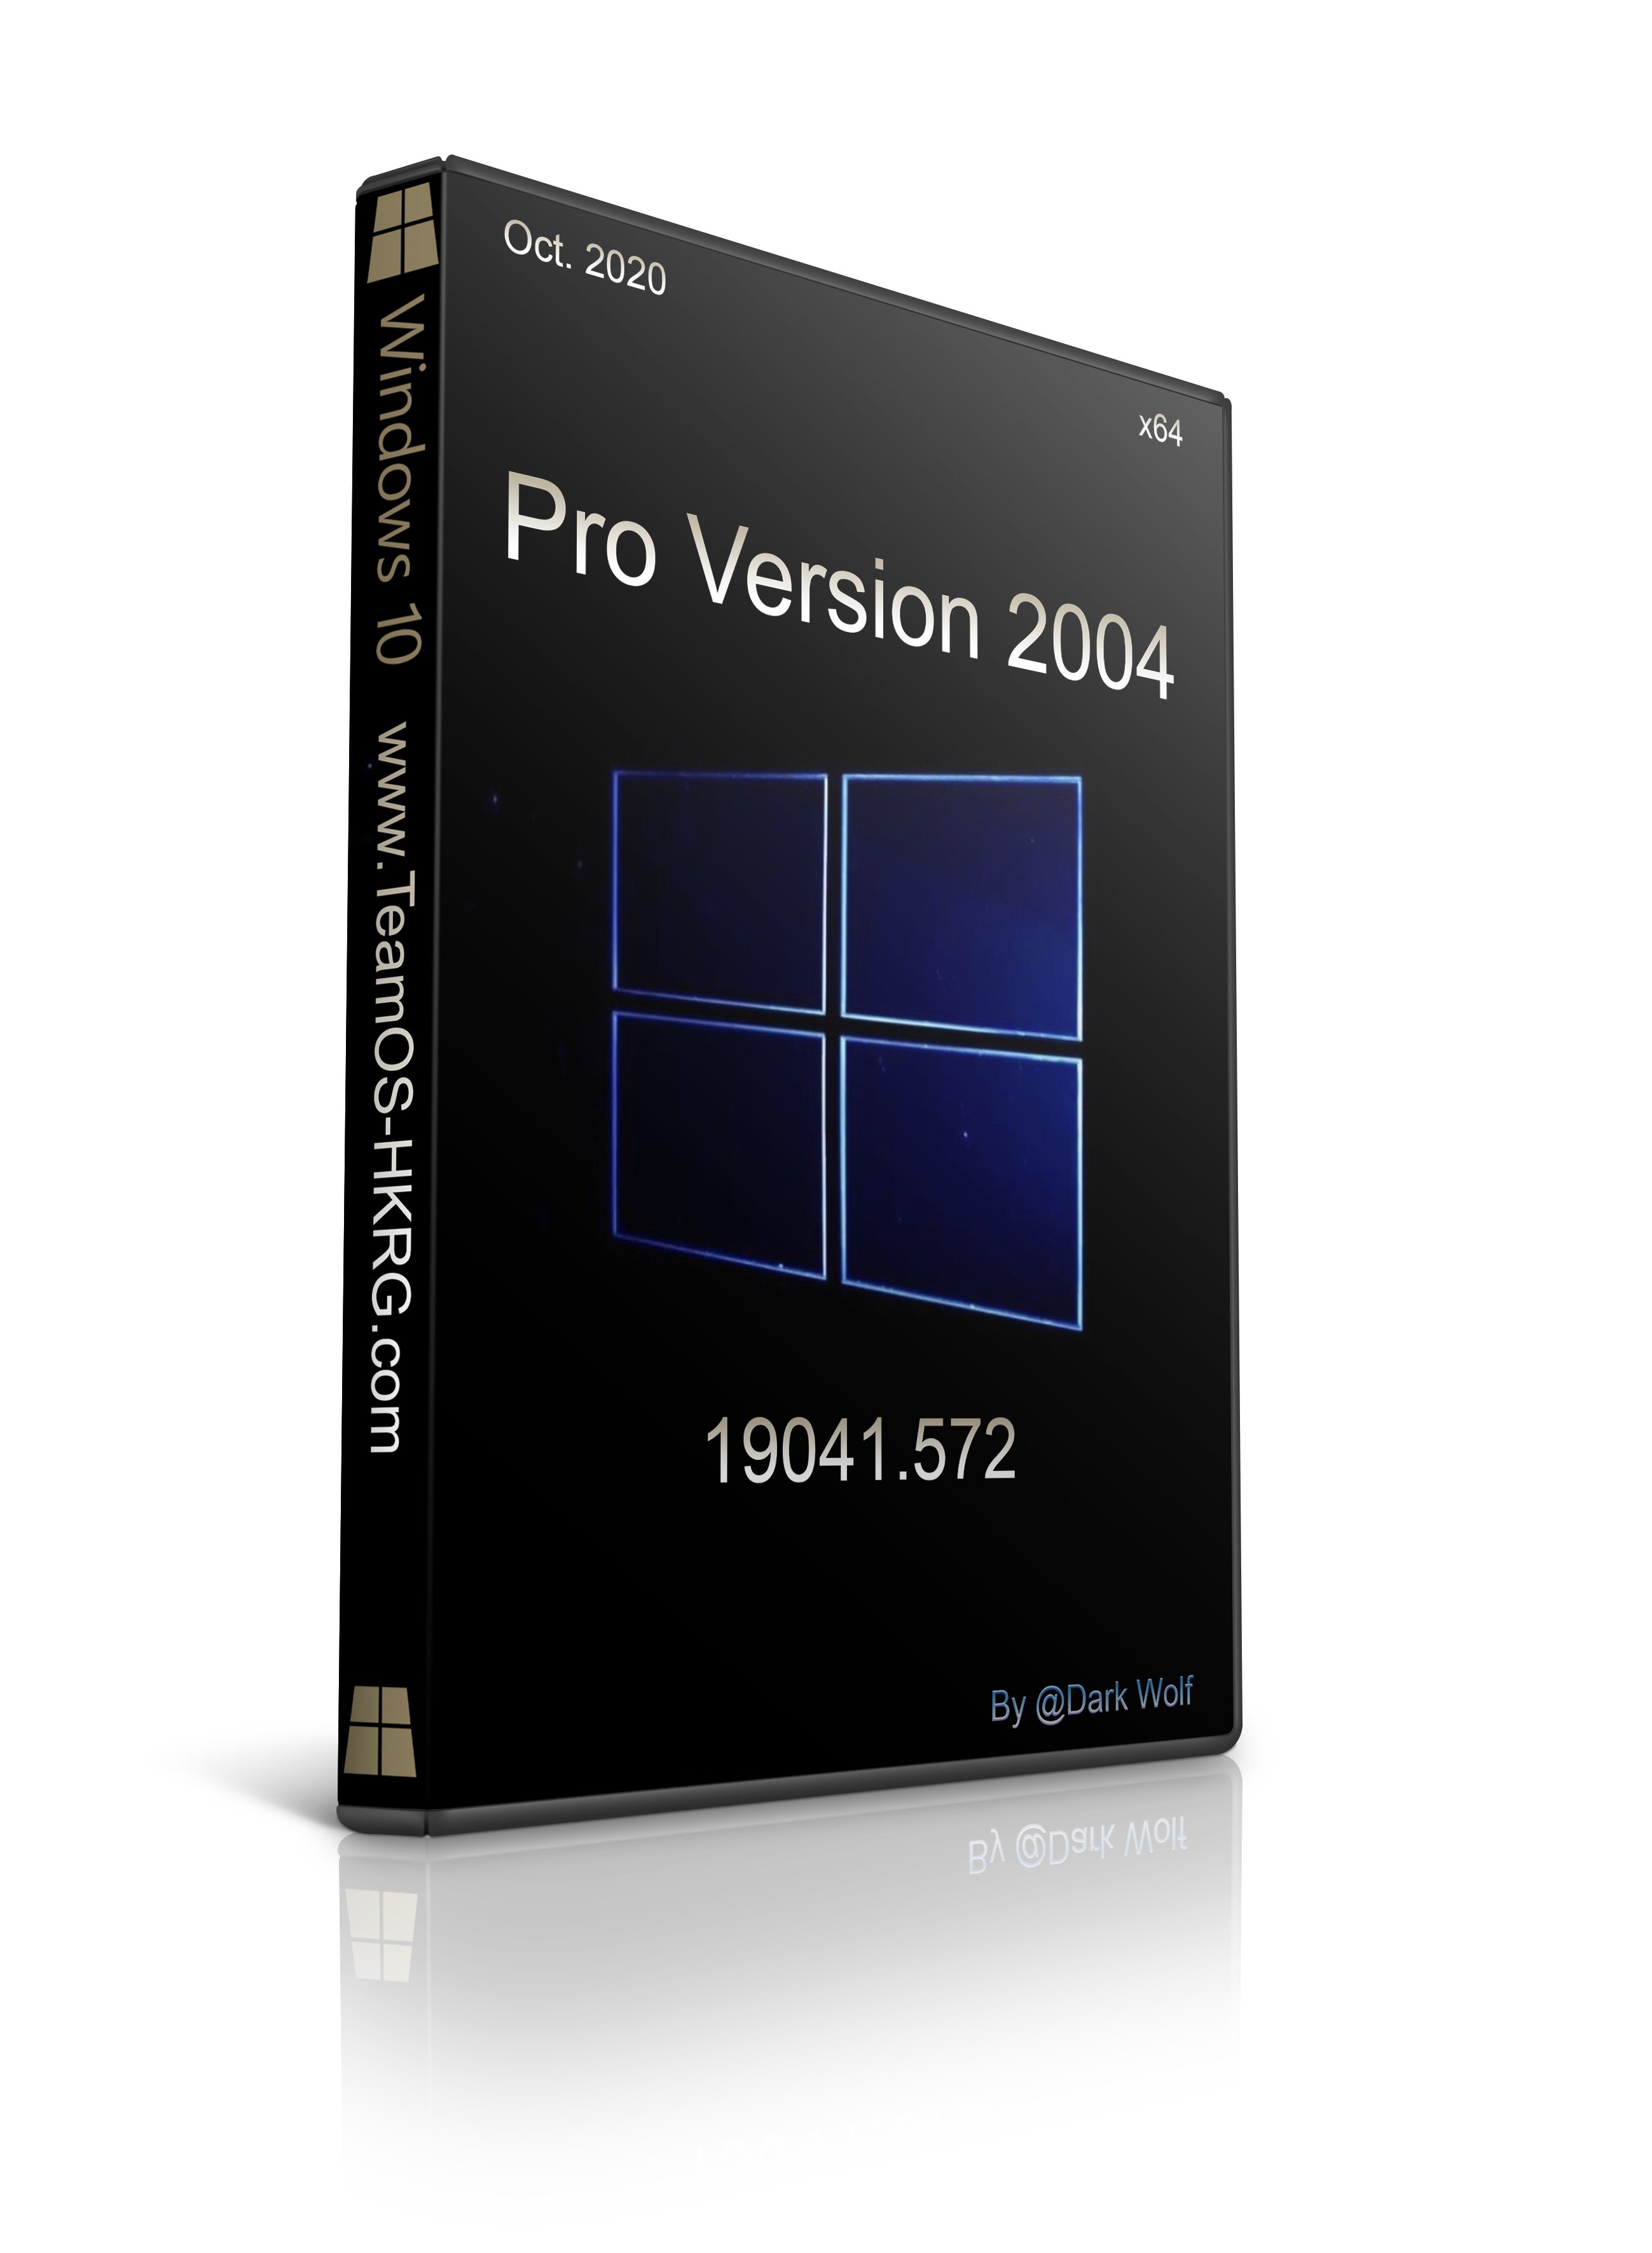 windows 10 pro version 2004 free download